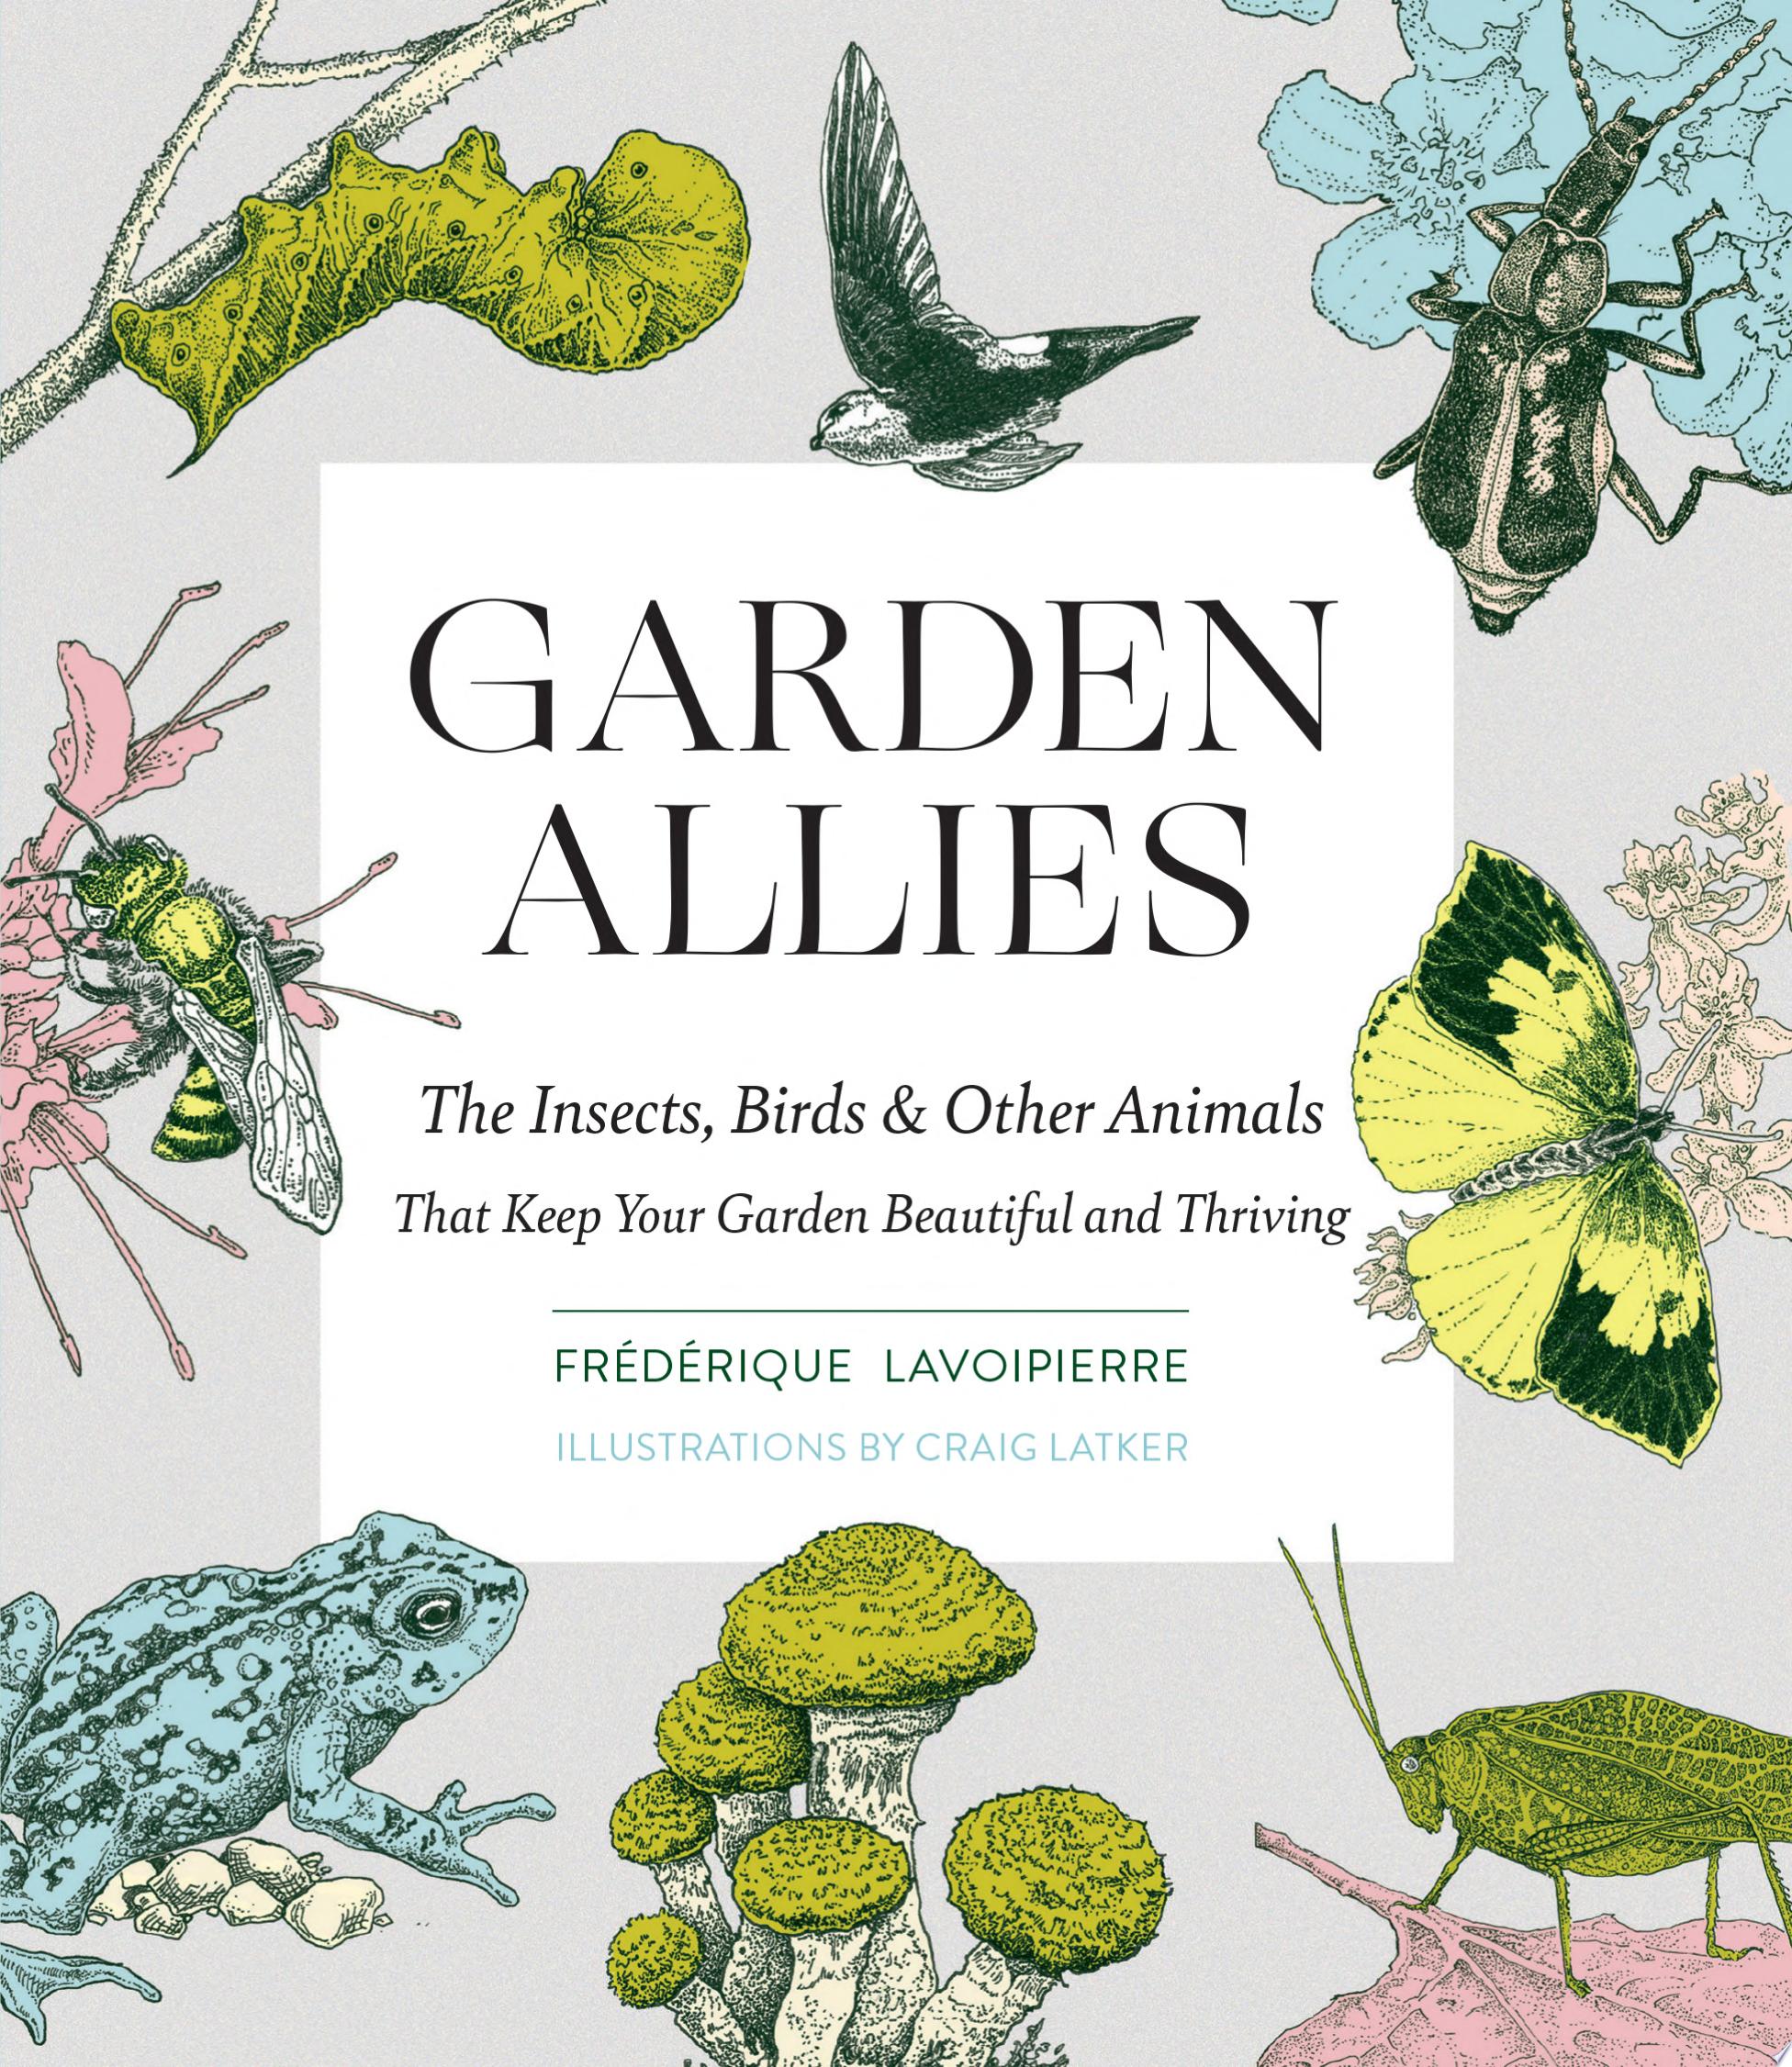 Image for "Garden Allies"